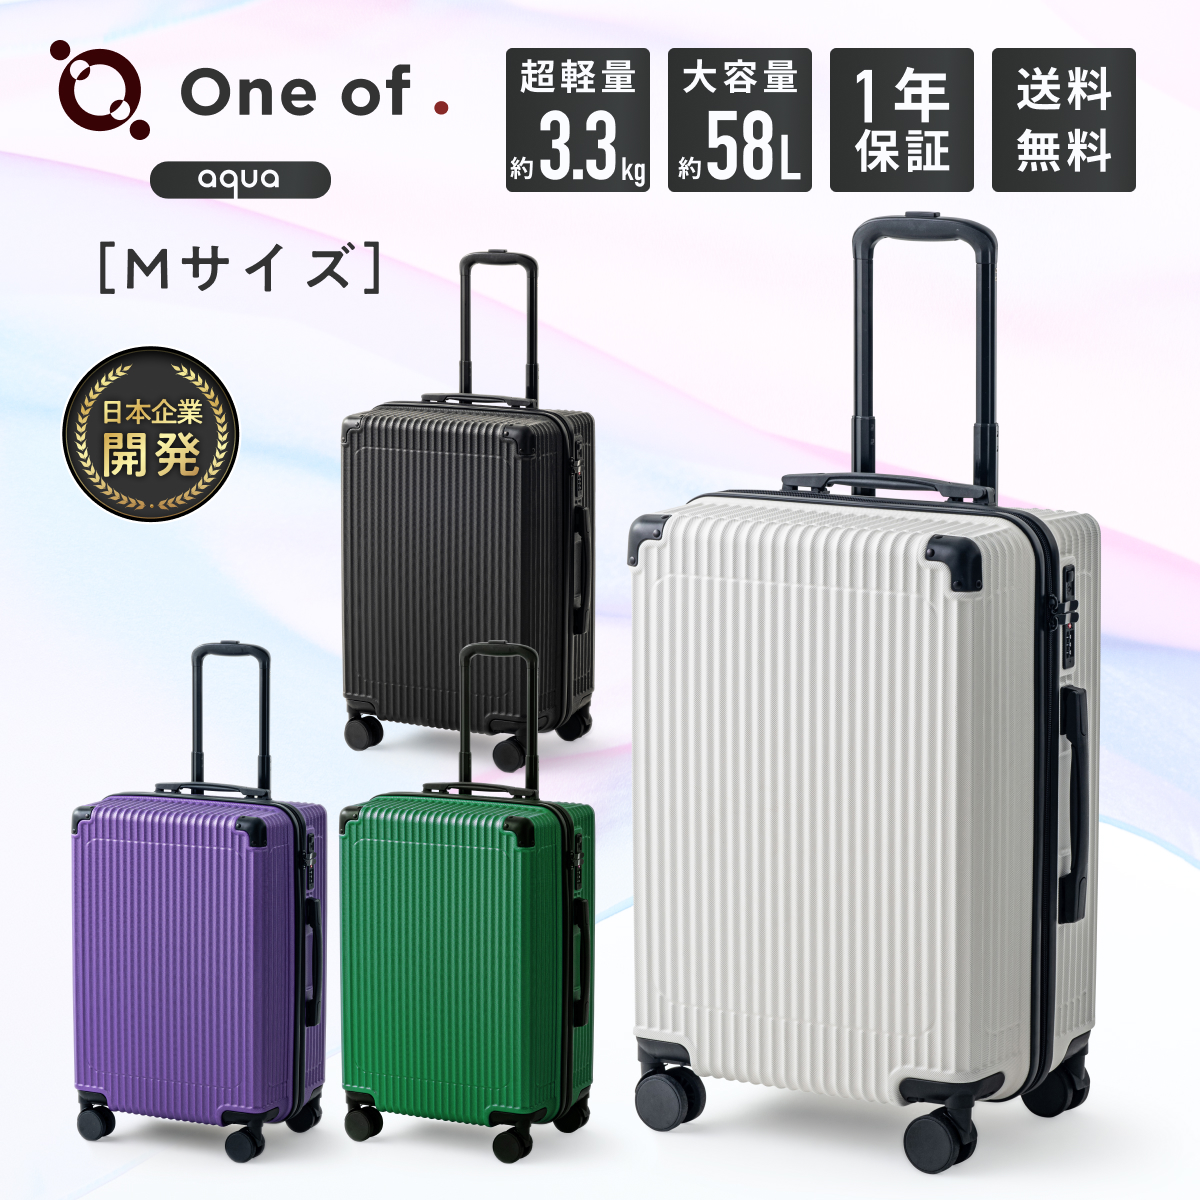 Oneof. aqua キャリーケース スーツケース Mサイズ キャリーバッグ 